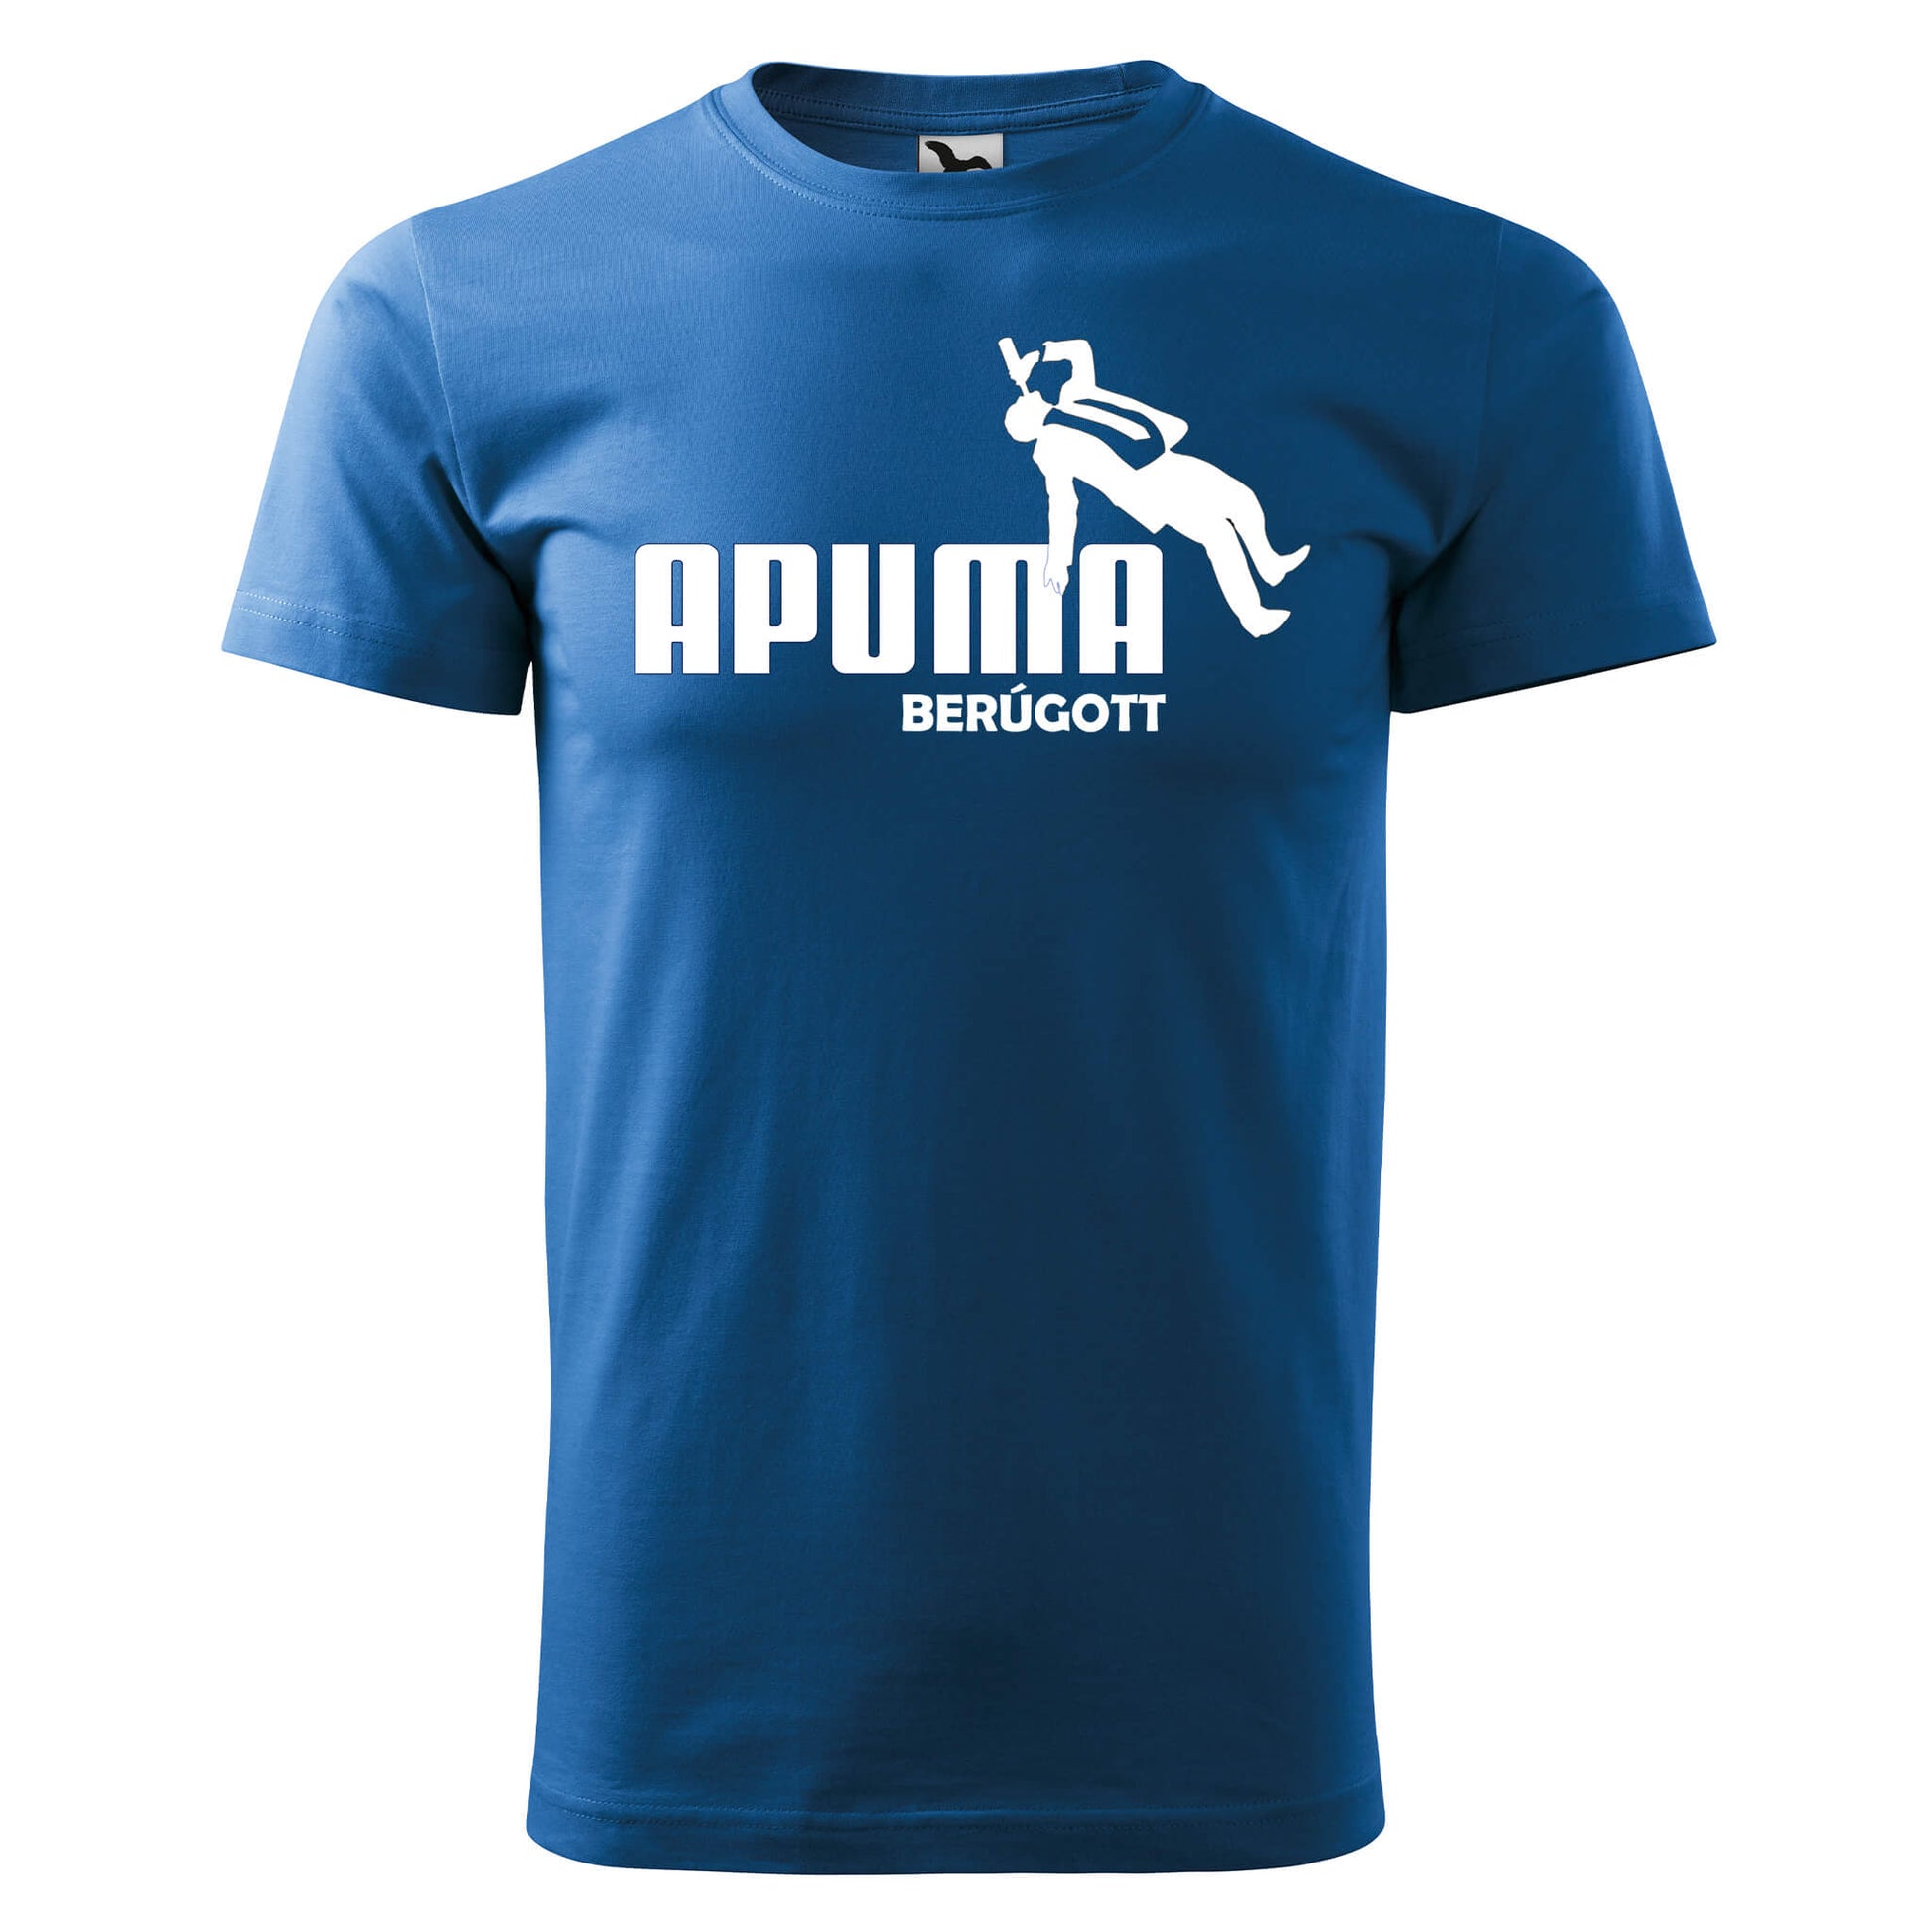 T-shirt - aPuma berúgott - rvdesignprint